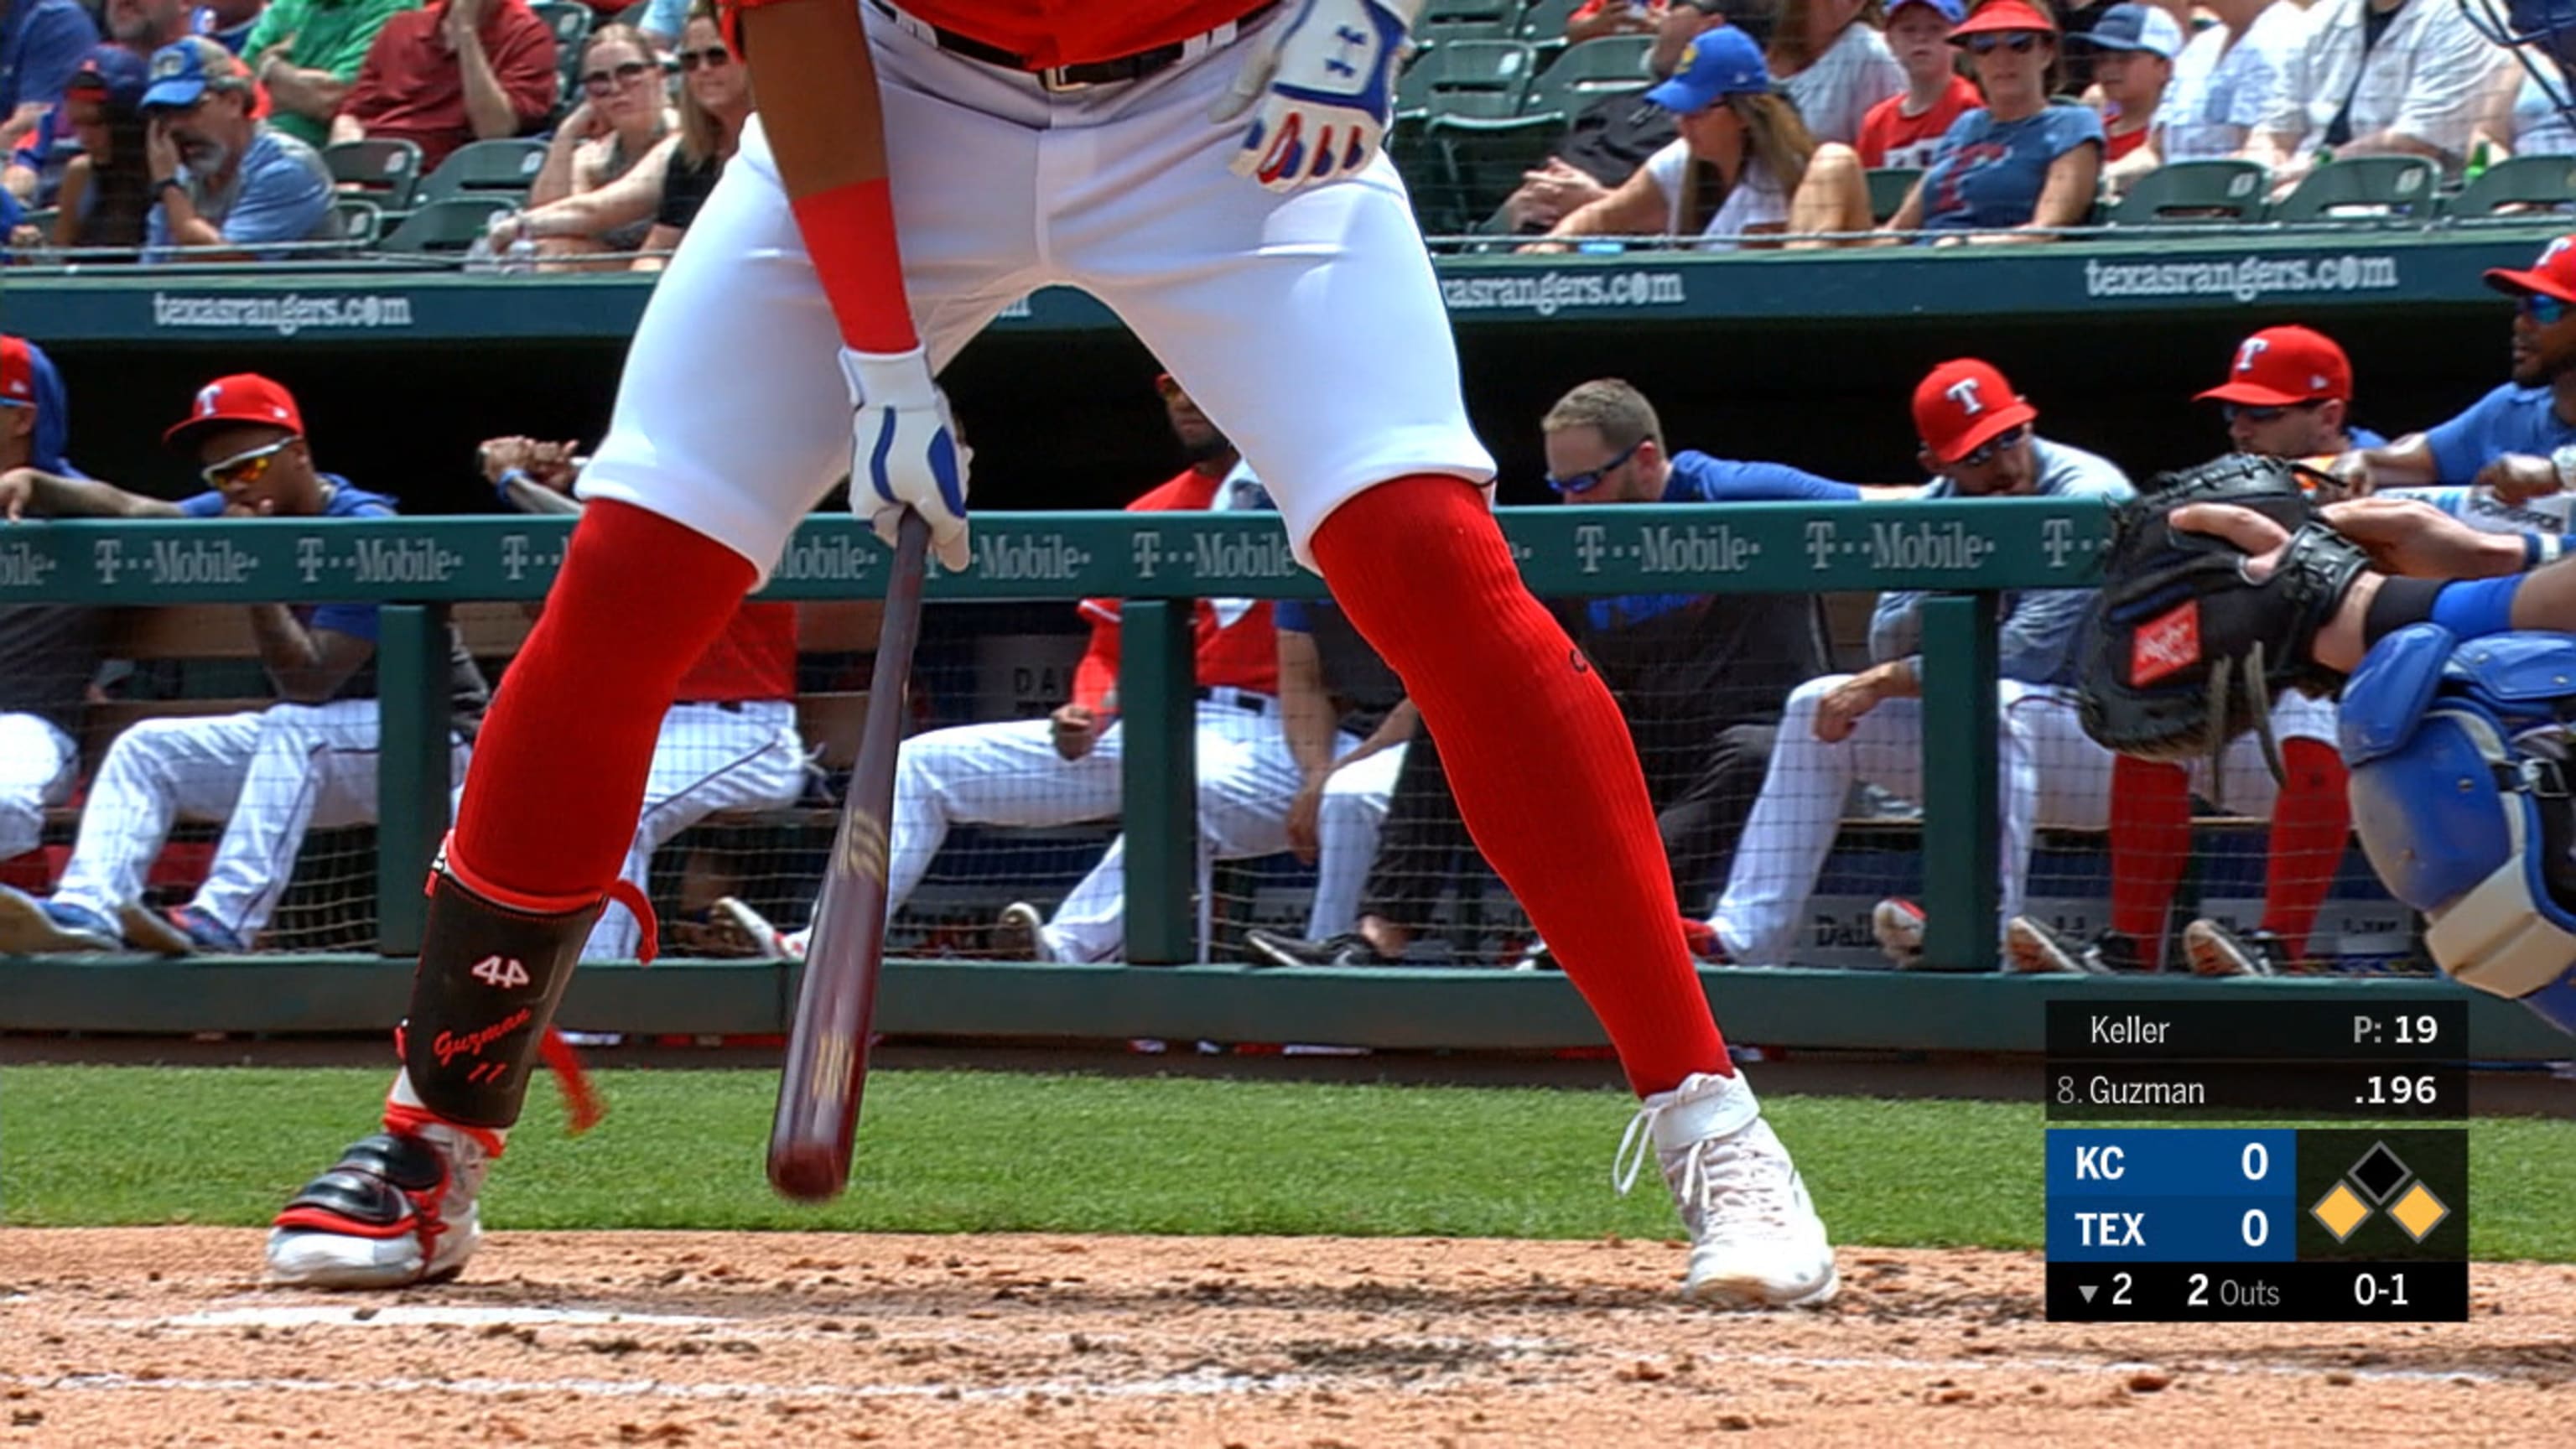 MLB players sporting above the knee pants : r/baseball